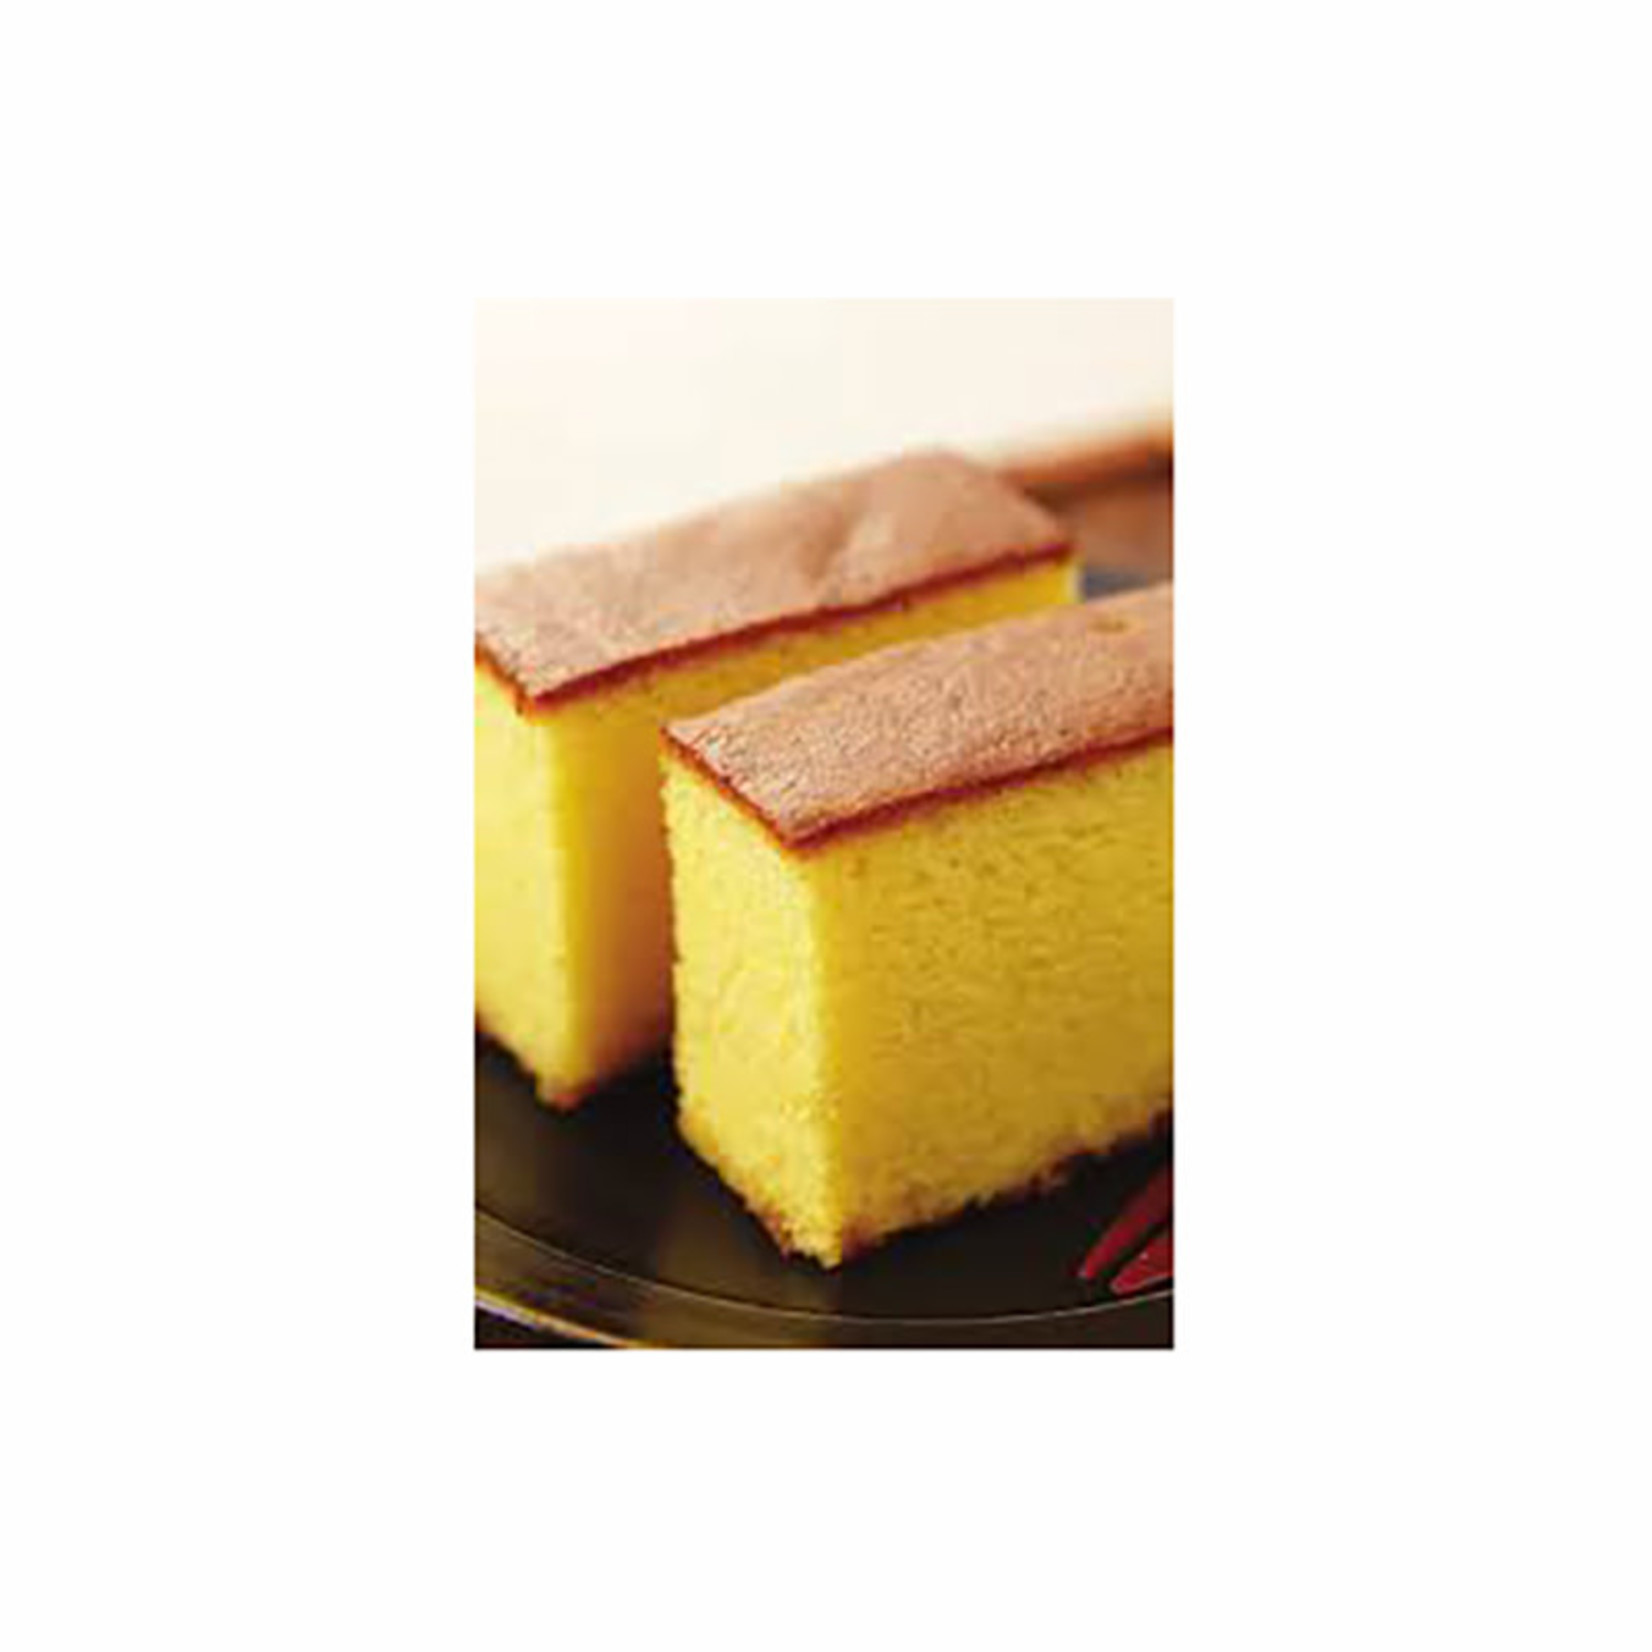 Pastry 1 Pastry 1 - Gen Prep, Gluten Free Sponge Cake - 11 lb, PA5309